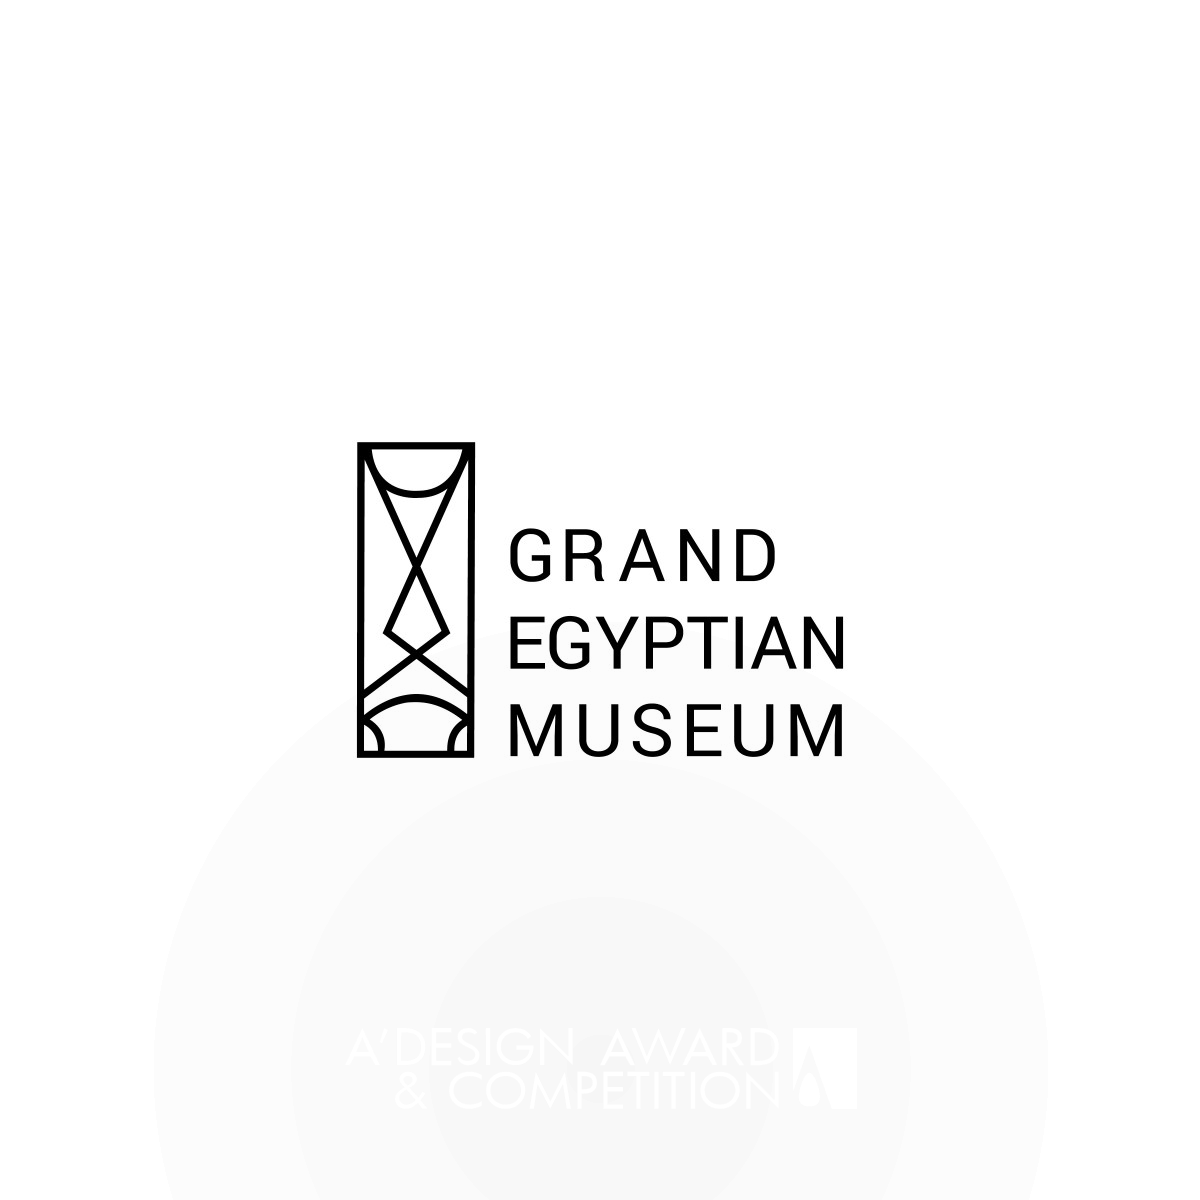 Grand Egyptian Museum Corporate Identity